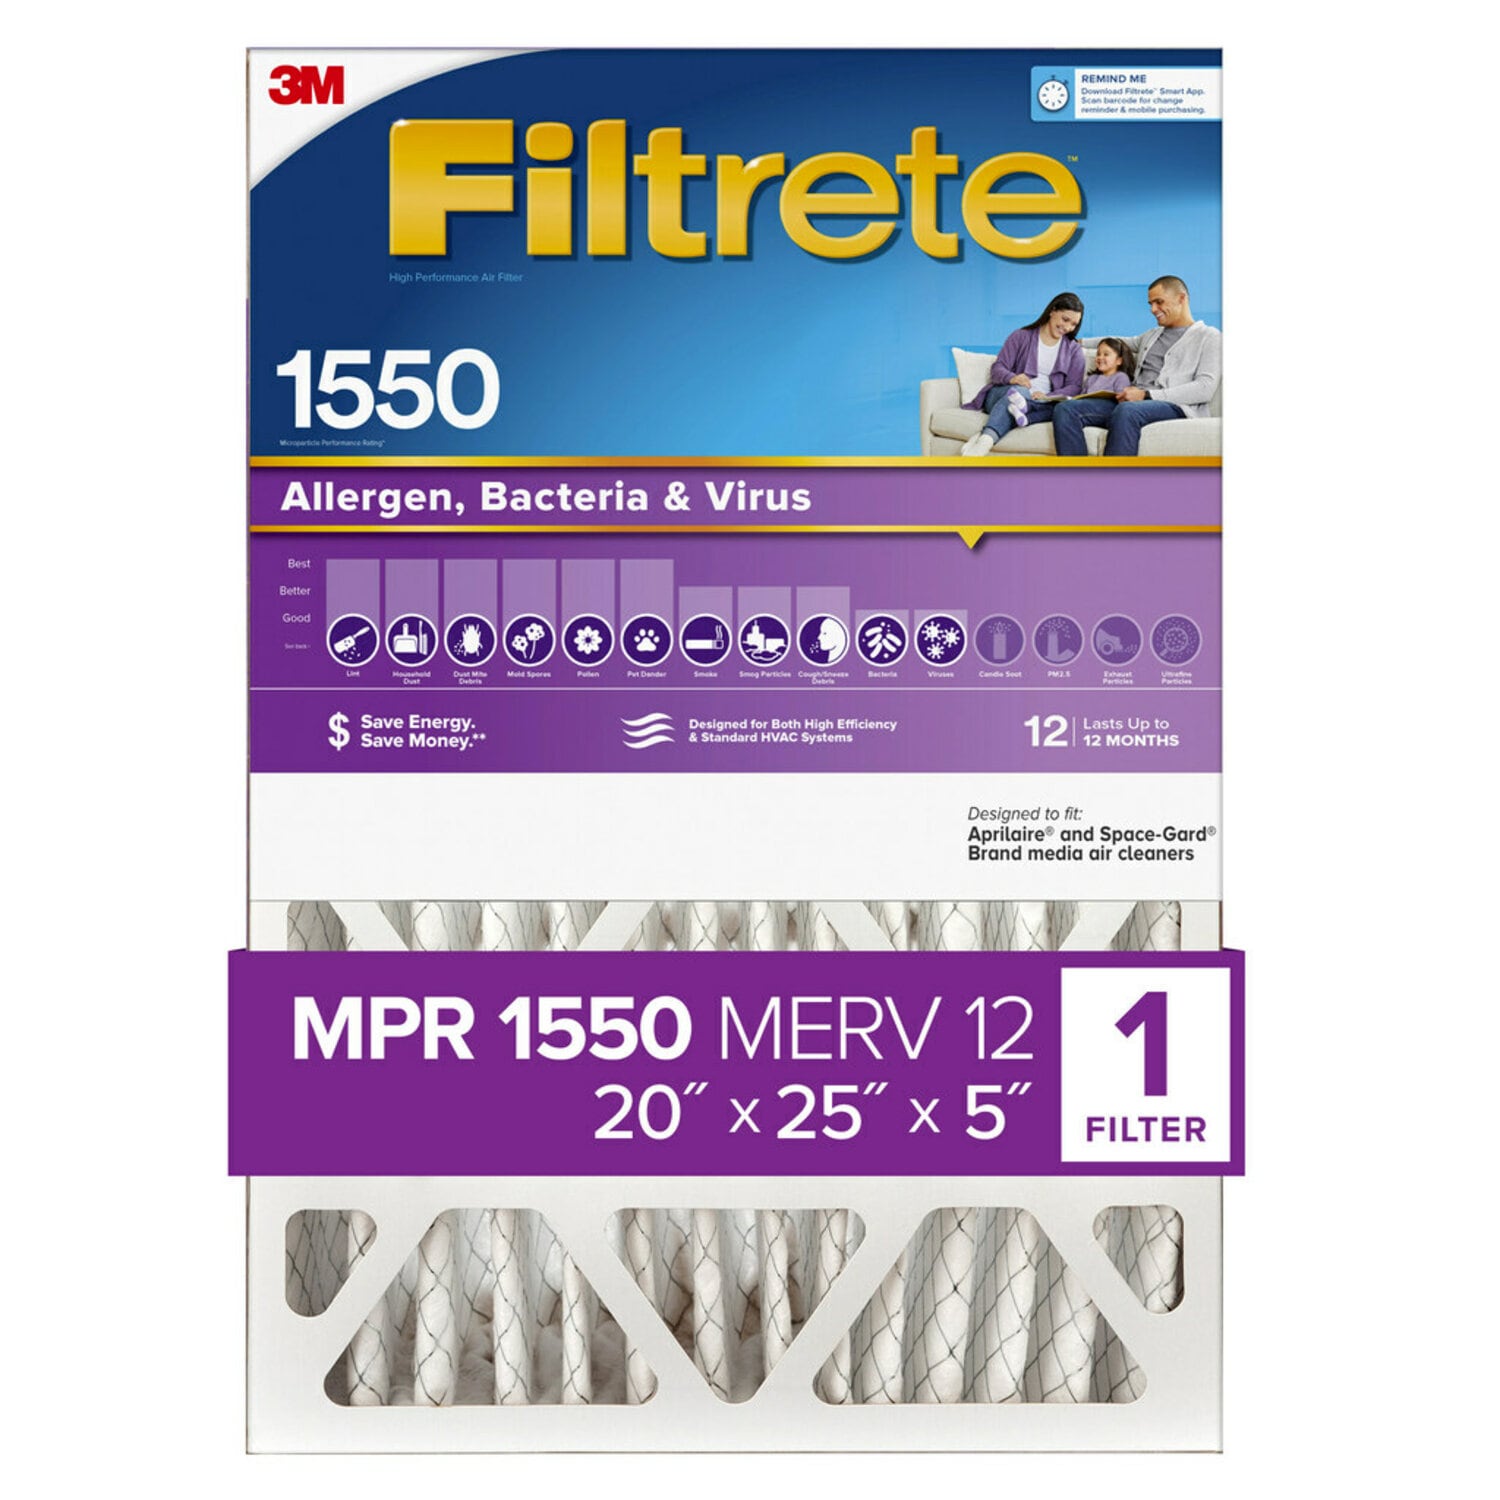 7100188166 - Filtrete Ultra Allergen Reduction Deep Pleat Filter NDP03-5IN-2, 20 in x 25 in x 5 in (50.8 cm x 63.5 cm x 12.7 cm)